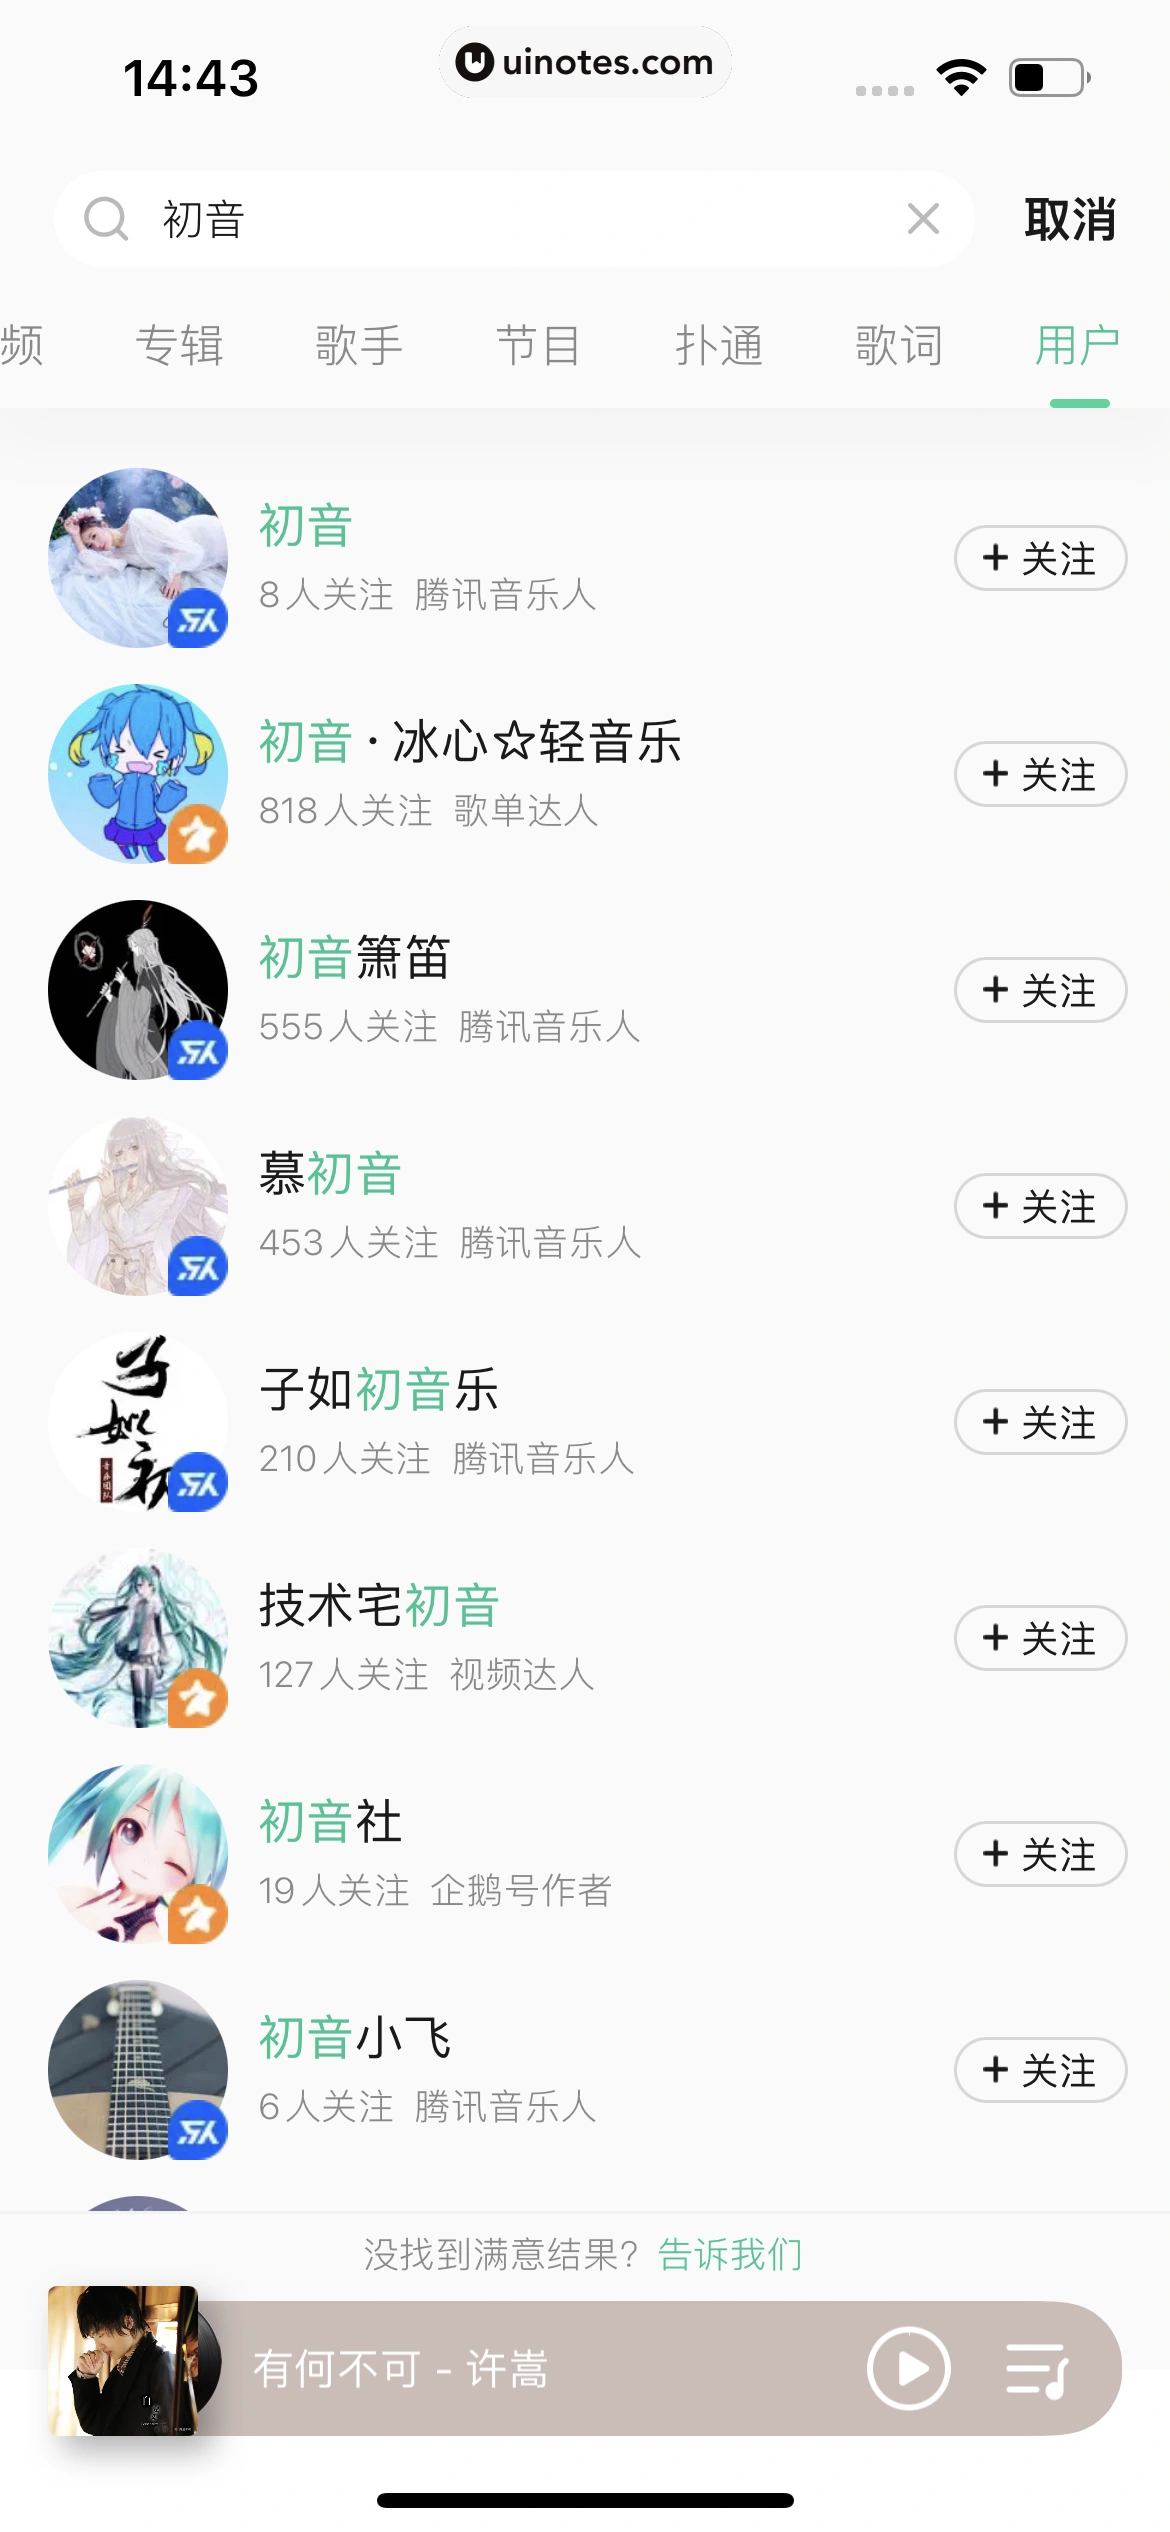 QQ音乐 App 截图 150 - UI Notes